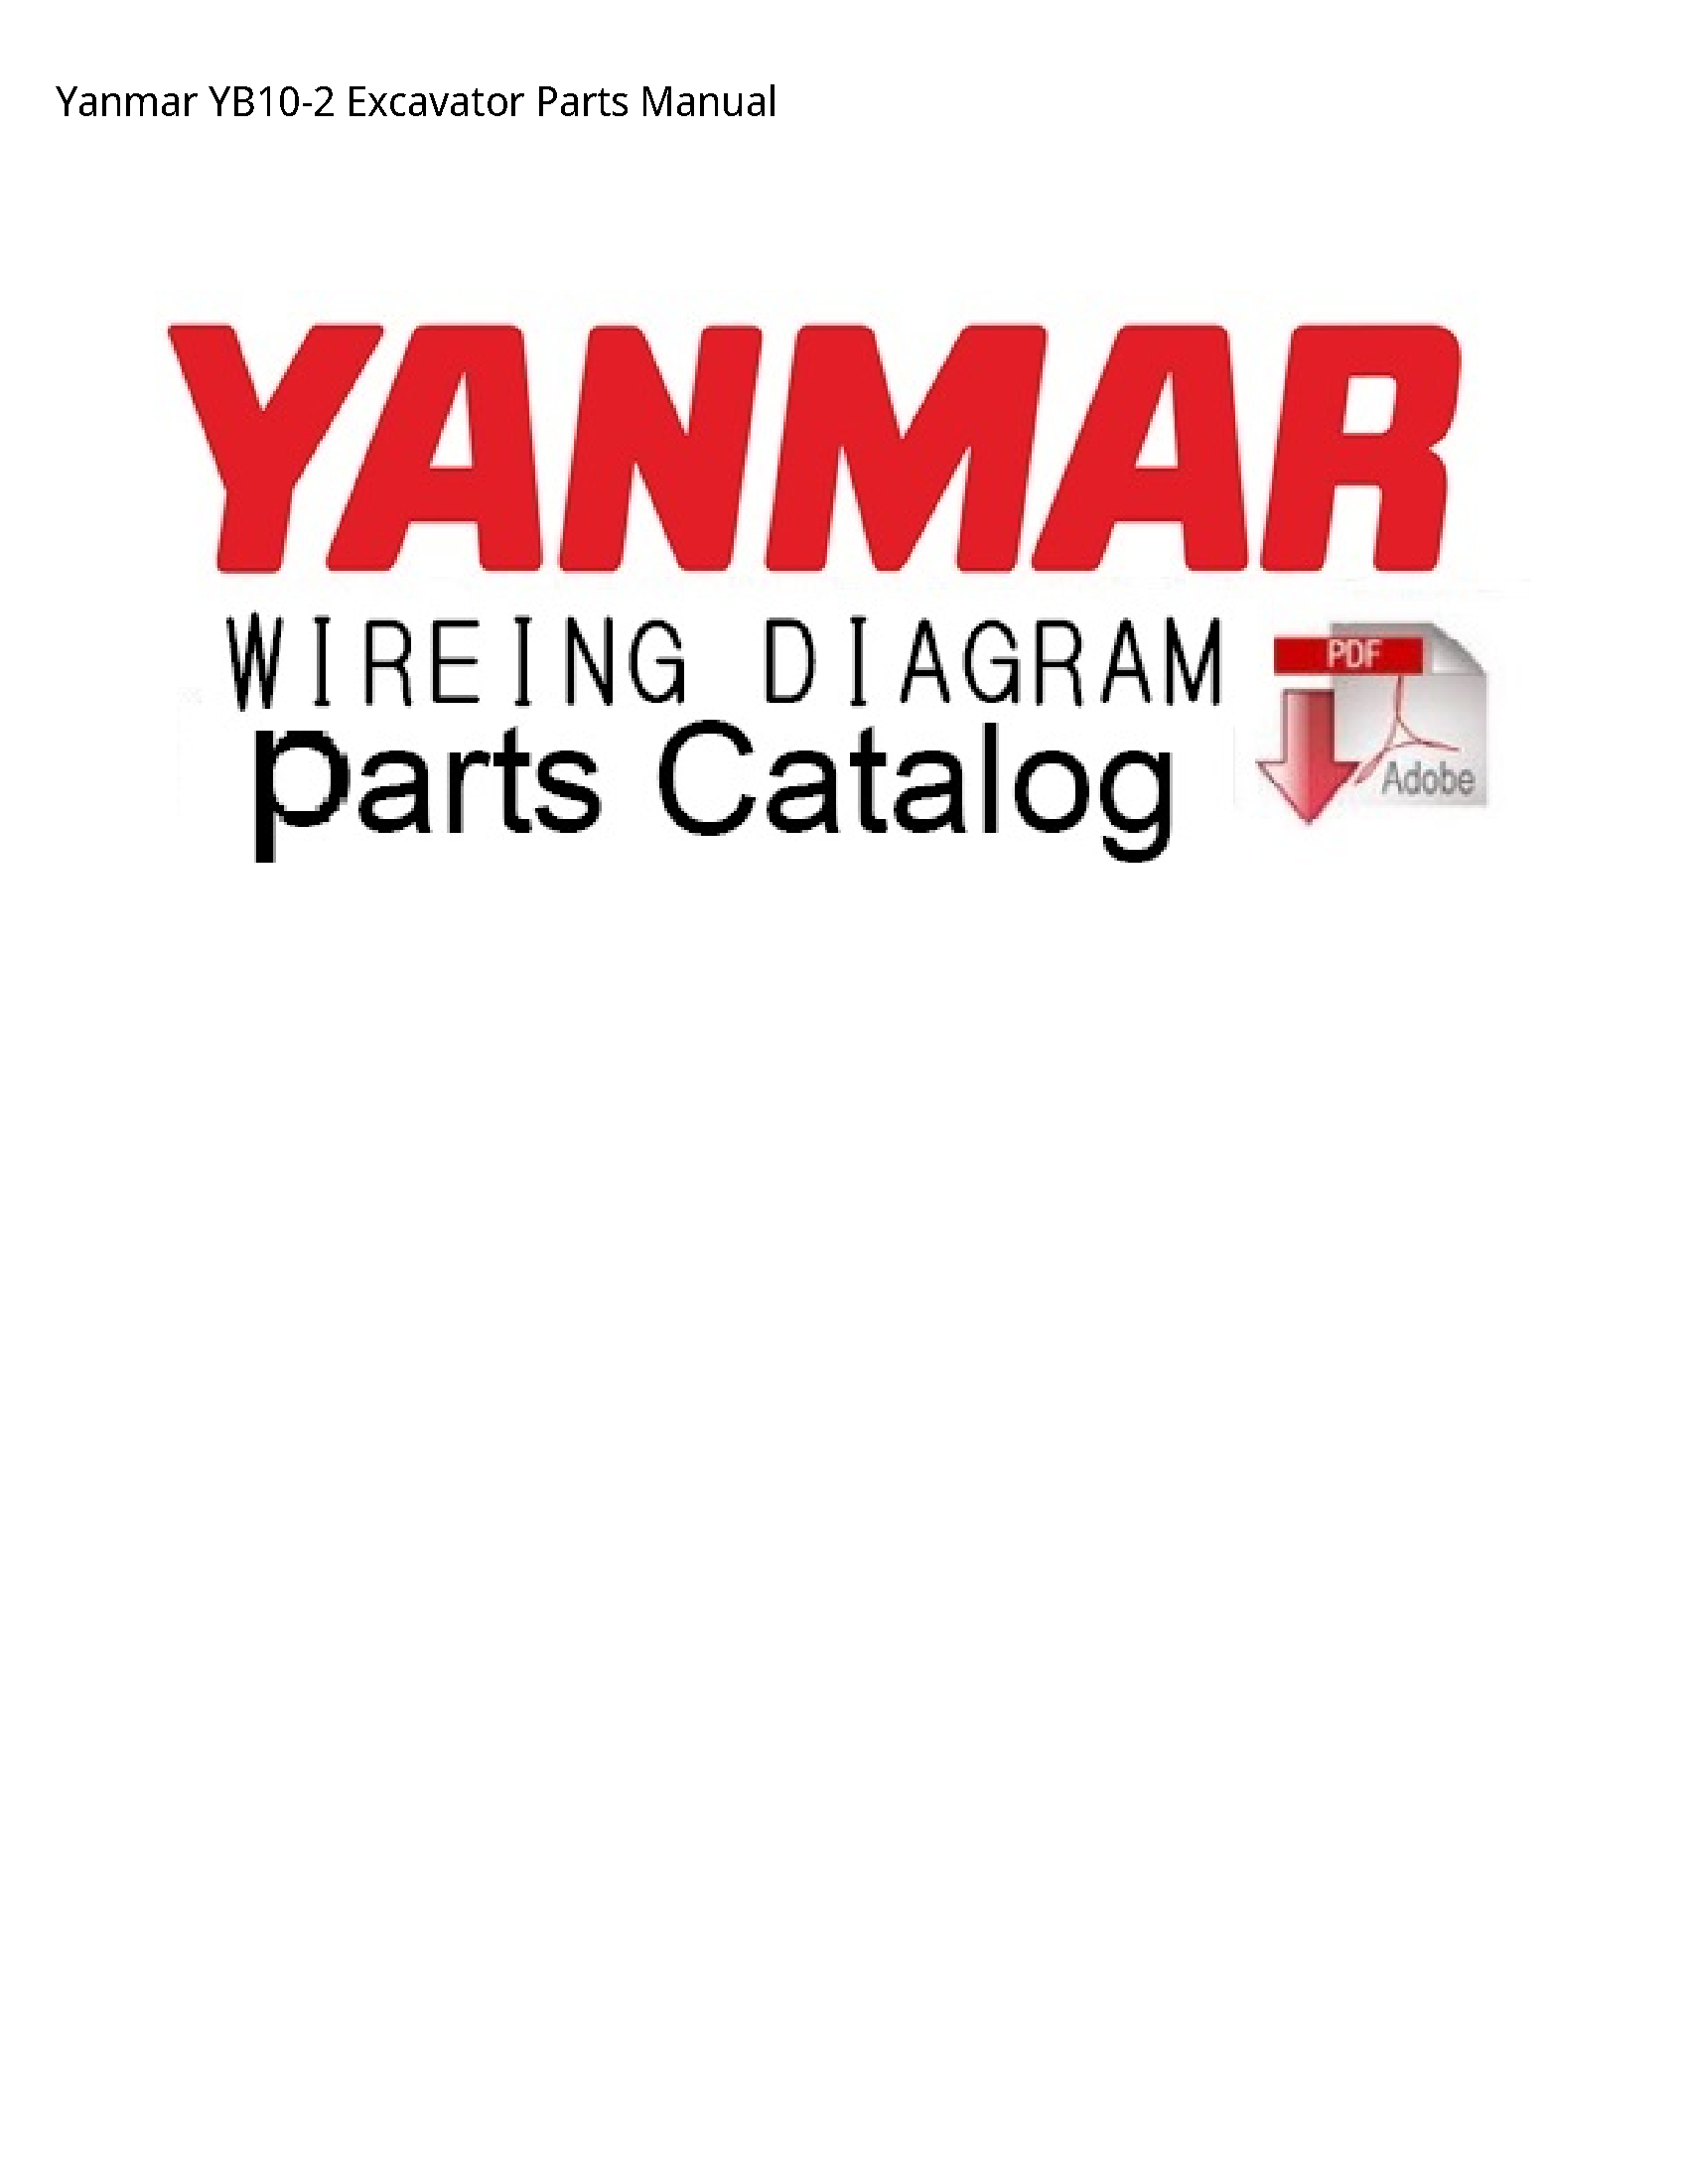 Yanmar YB10-2 Excavator Parts manual